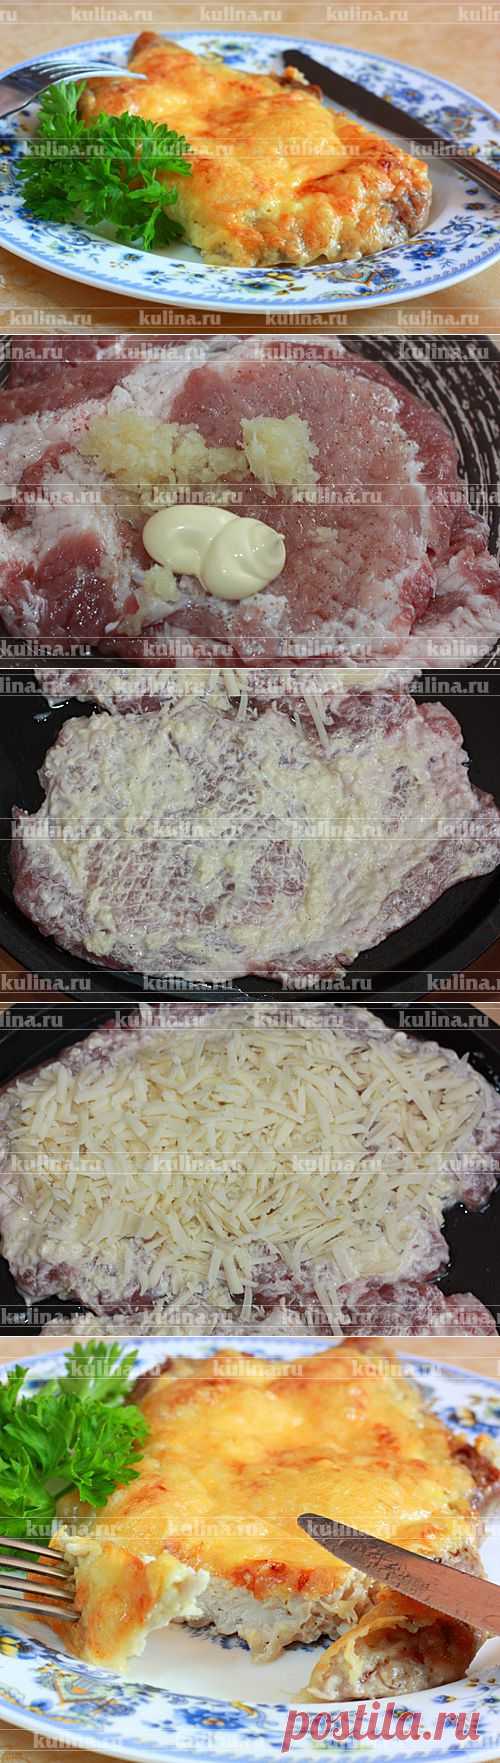 Карбонат в духовке с чесноком и сыром – рецепт приготовления с фото от Kulina.Ru